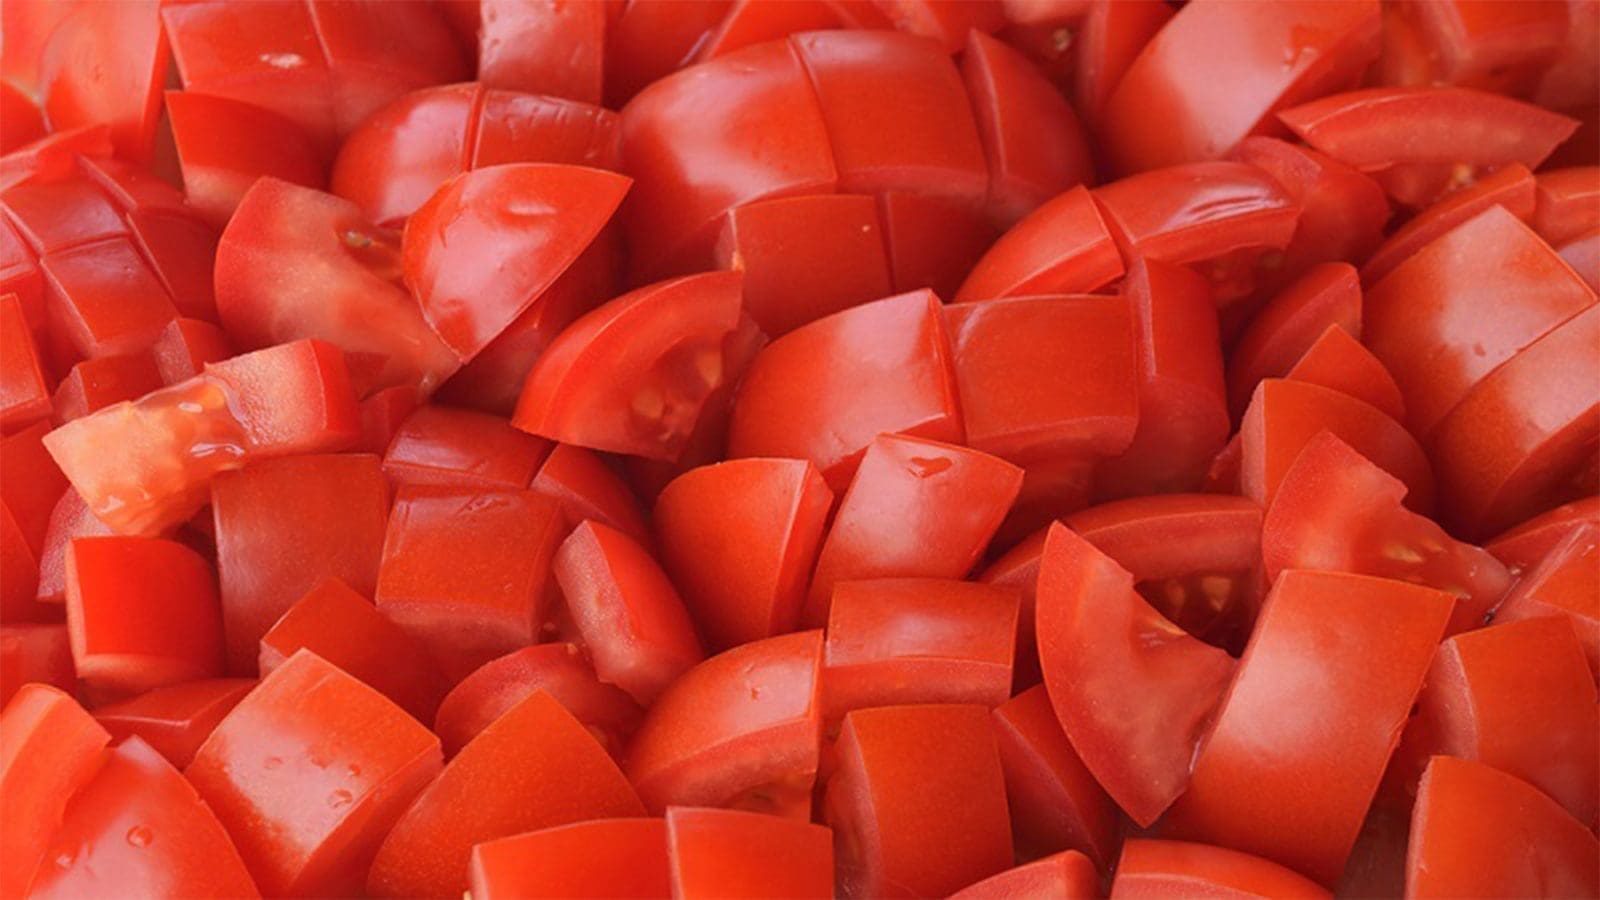 Frozen tomato cubes behind Salmonella outbreak in Finland